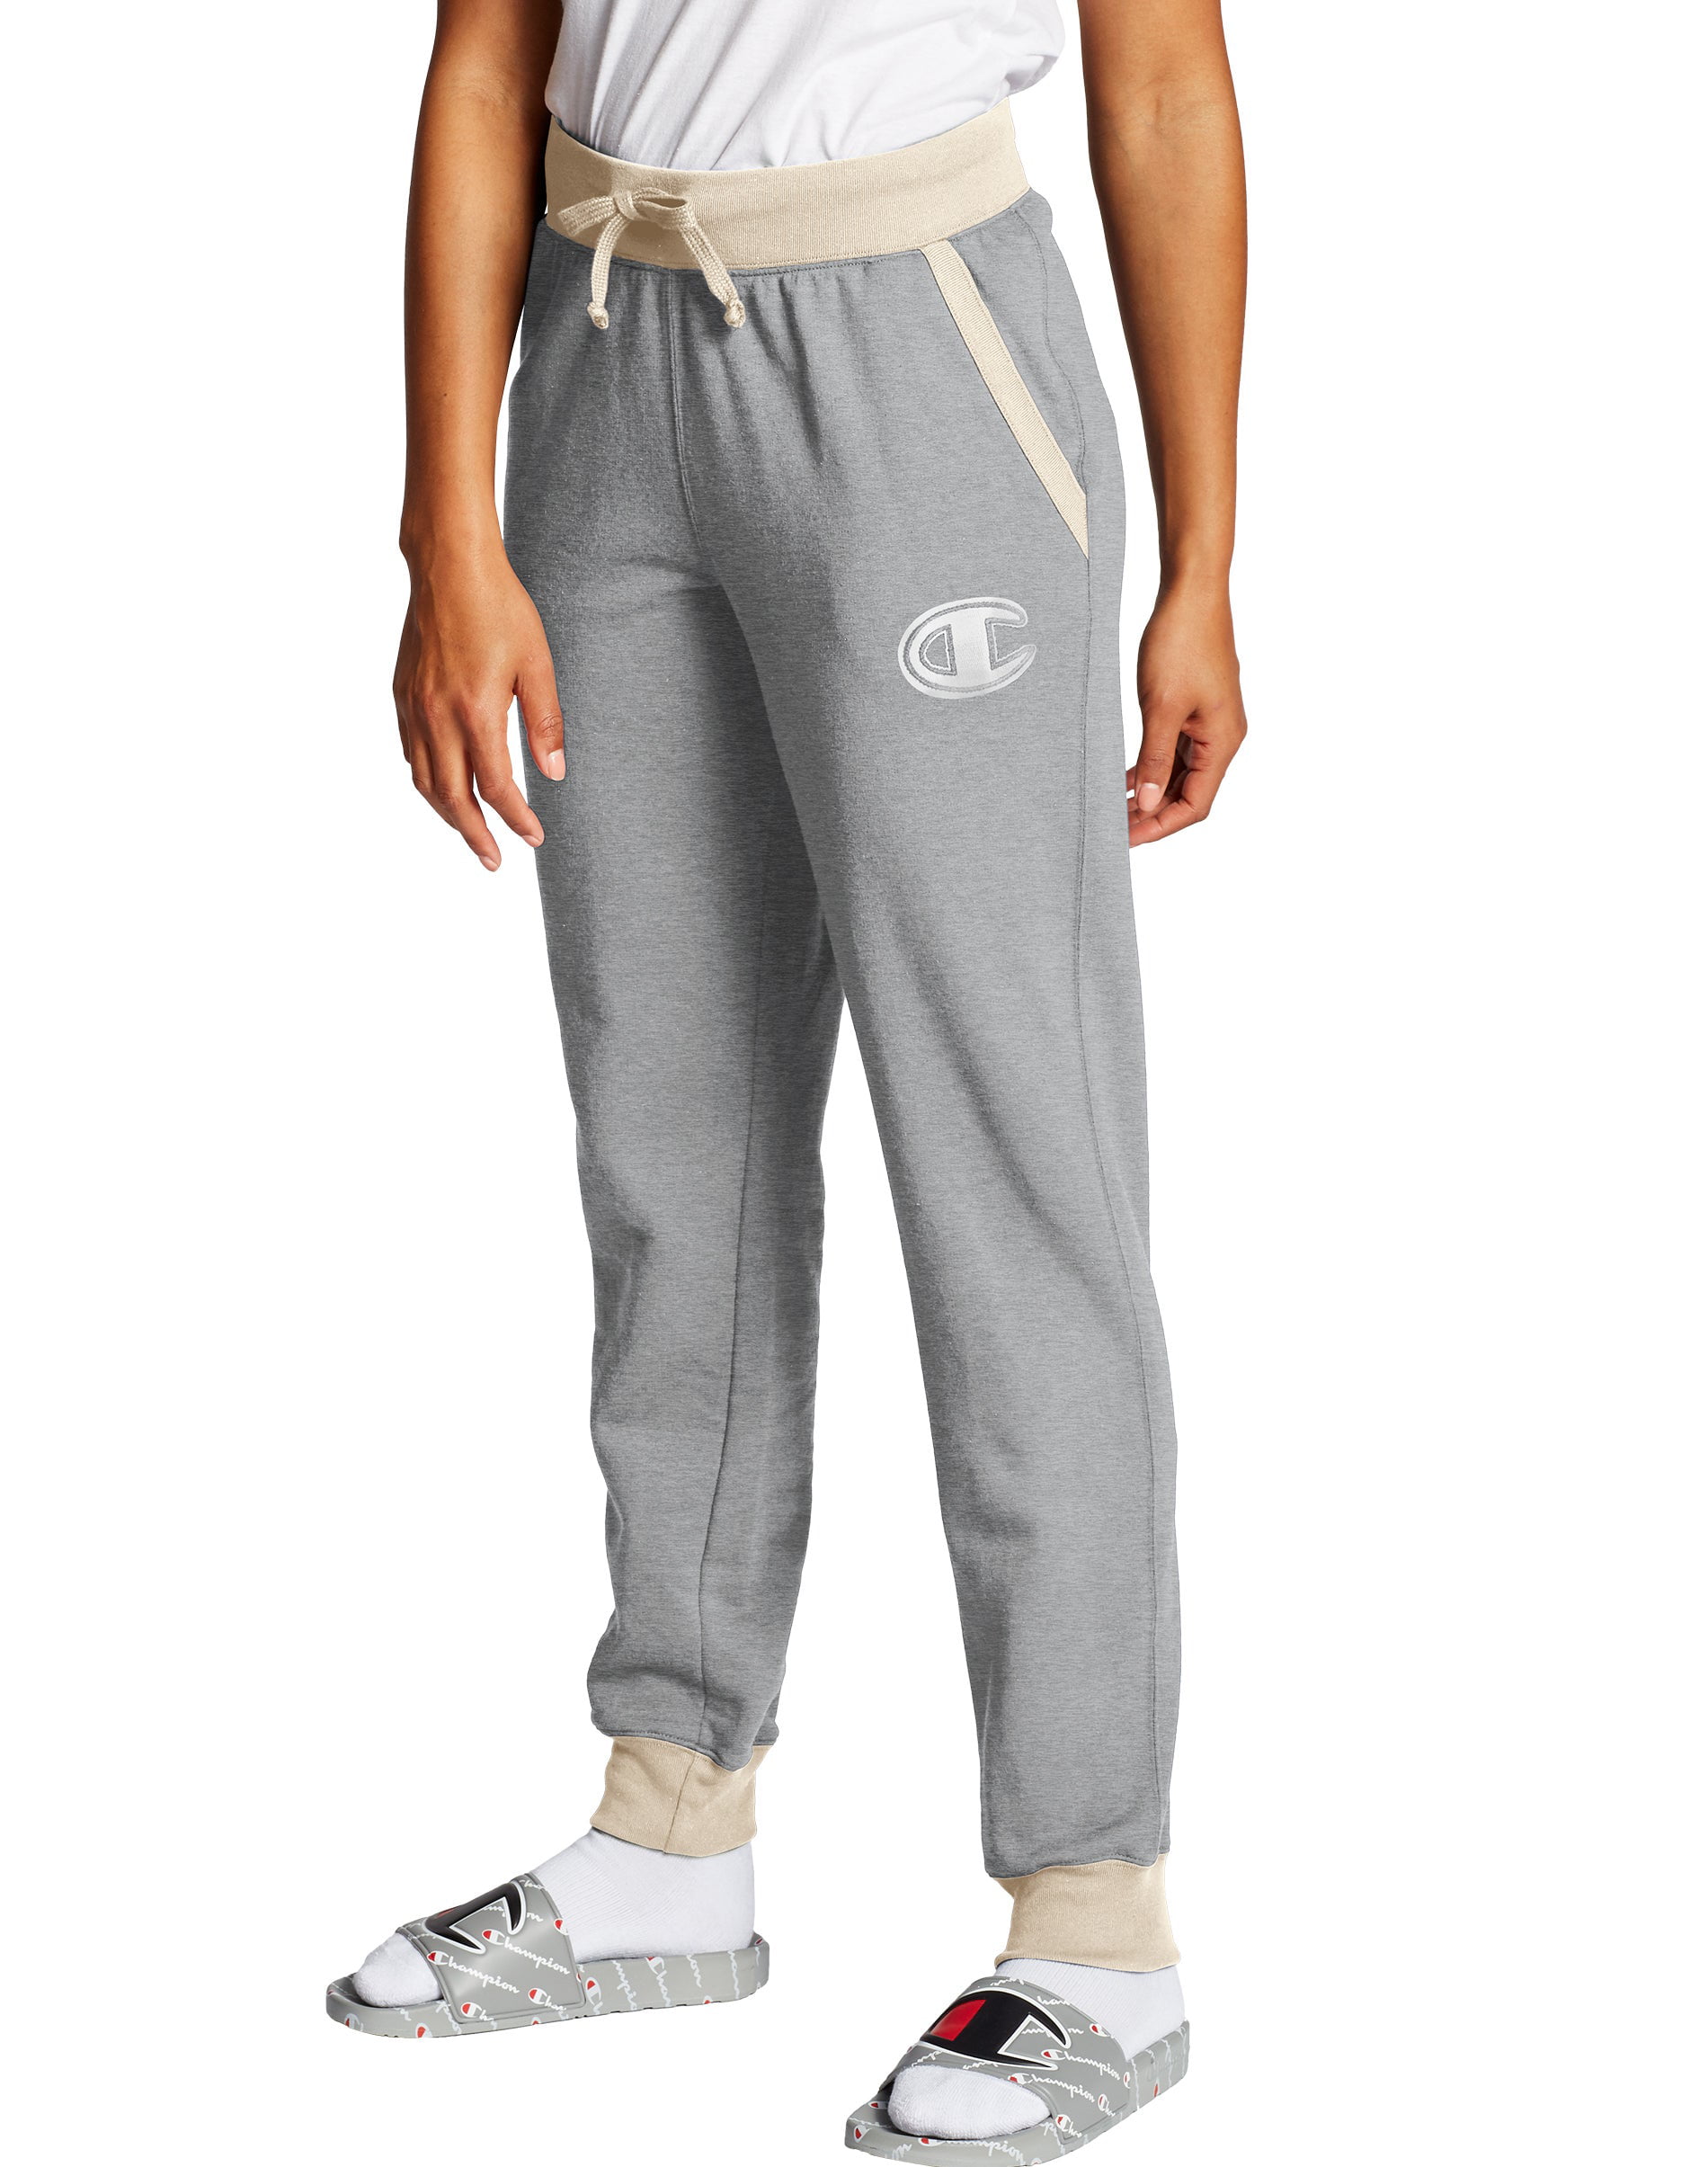 Women's Grey Champion Sweatpants with Chainstitch Big C Logo